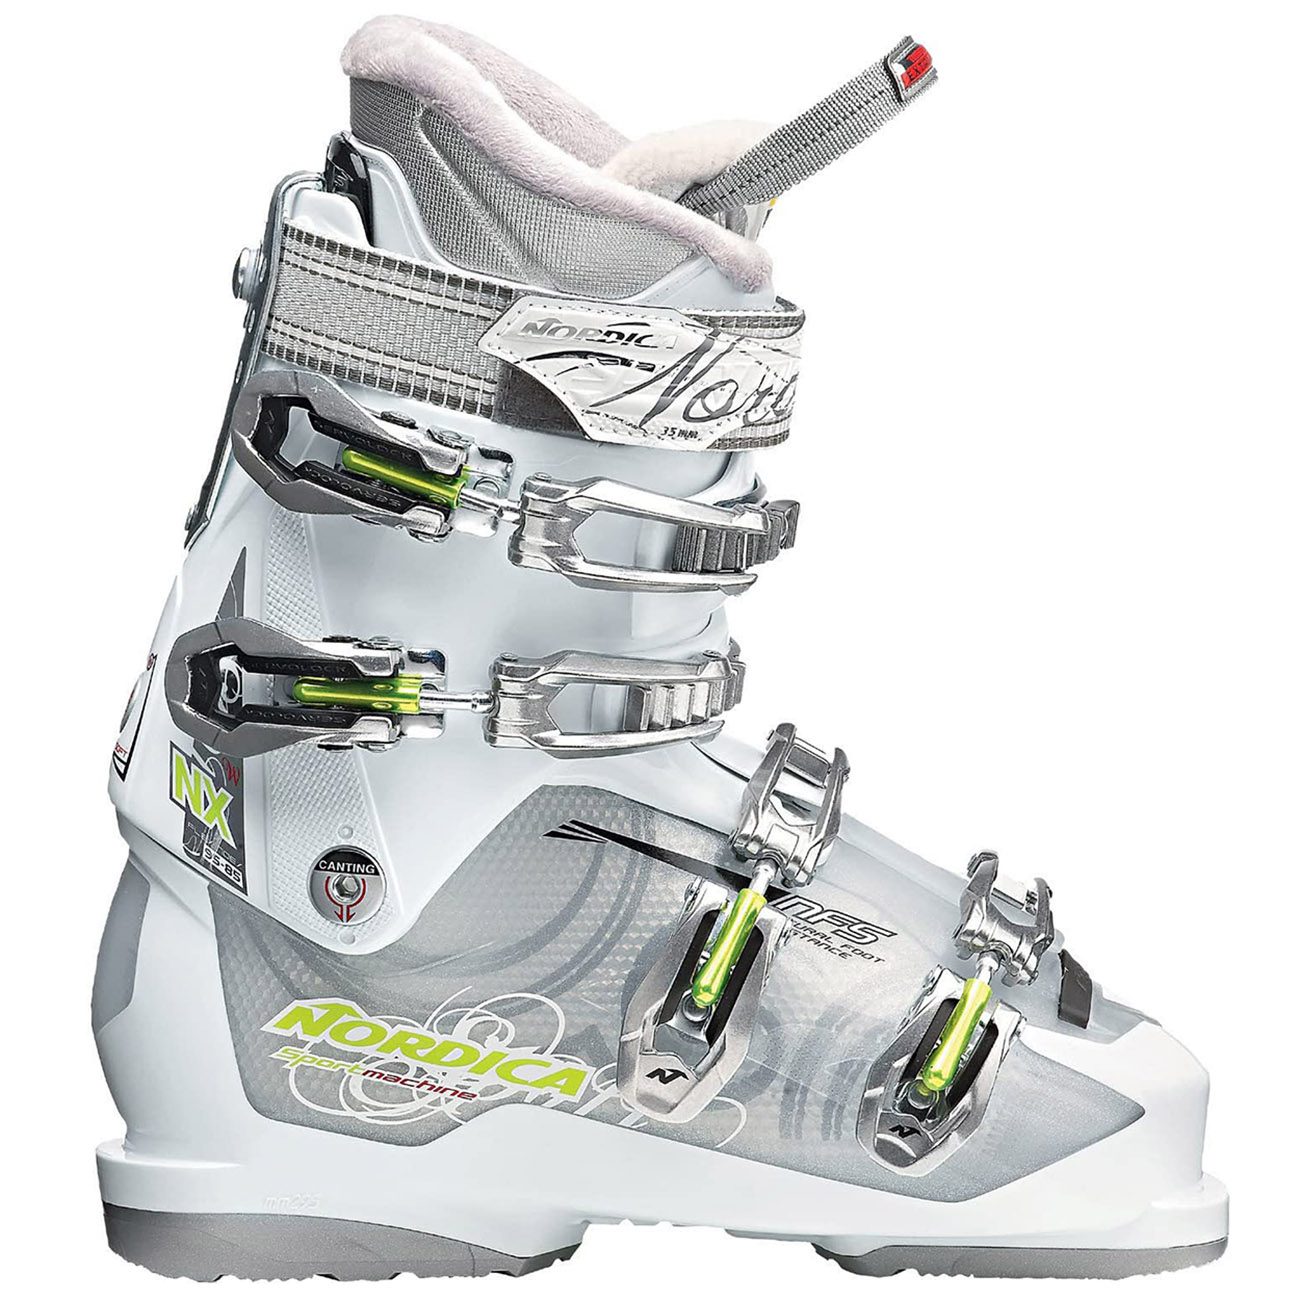 NORDICA Sportmachine NX W Women’s Ski Boots-Ασημί λευκό